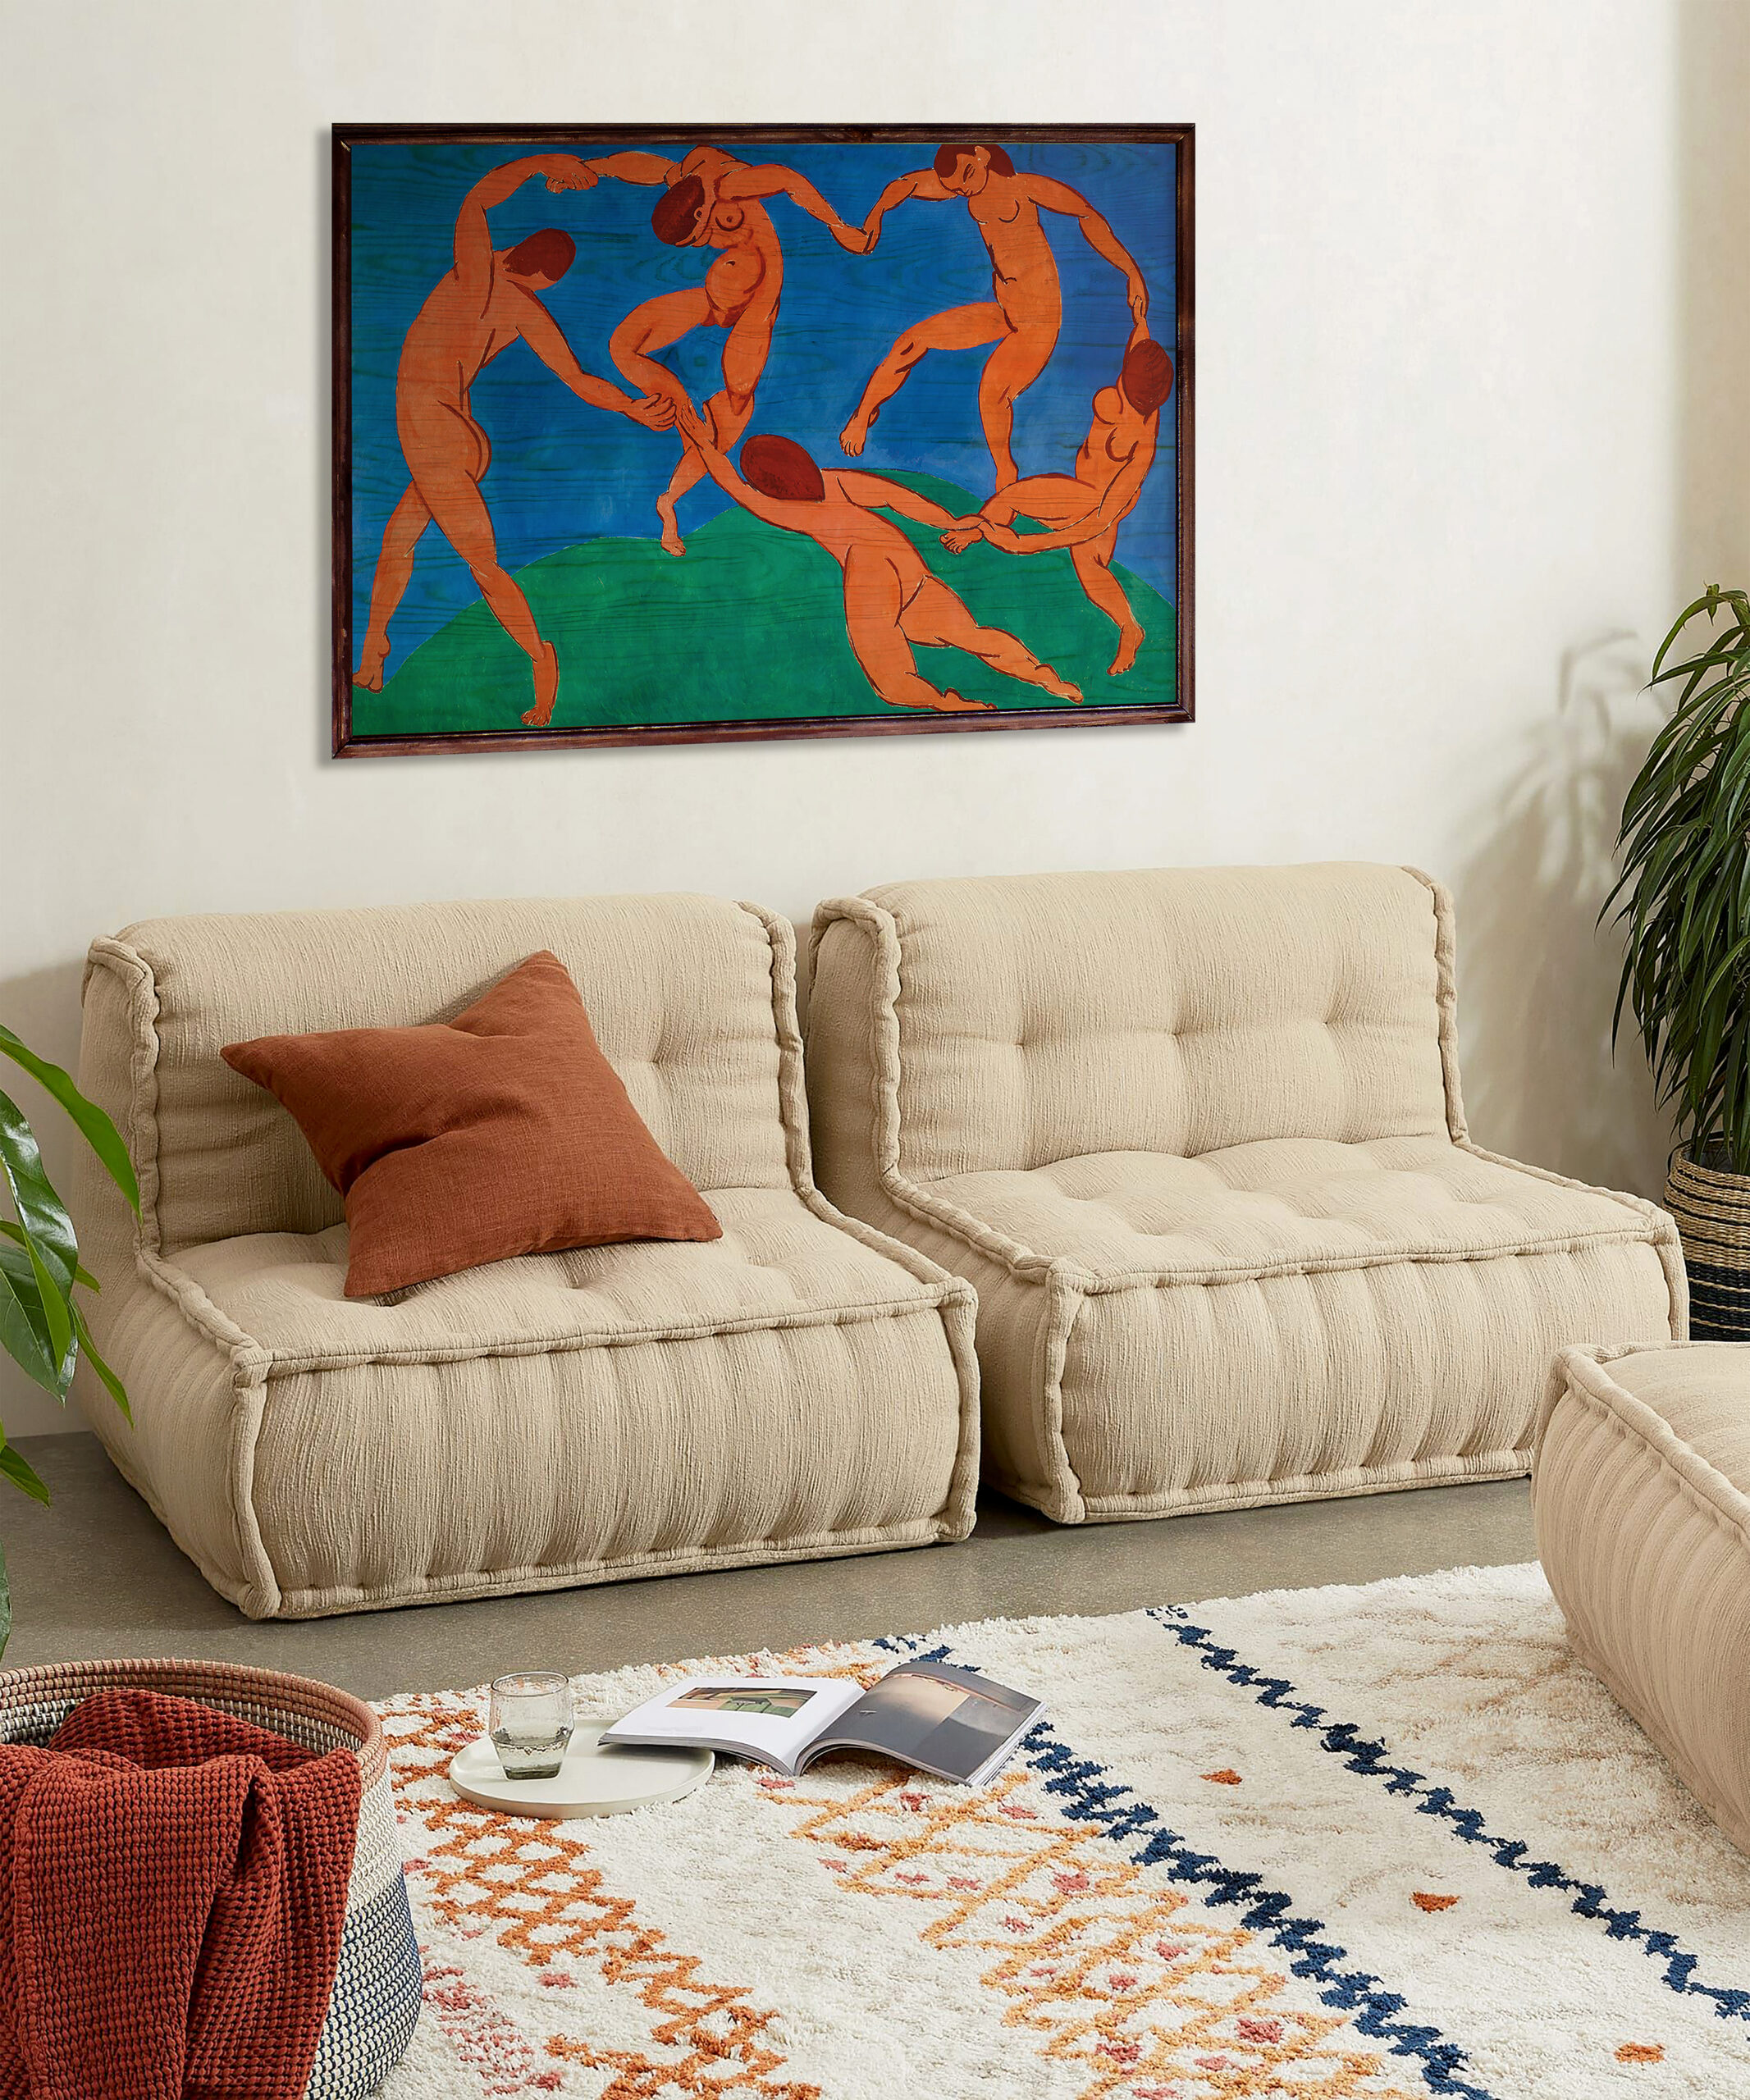 Henri Matisse / Dance